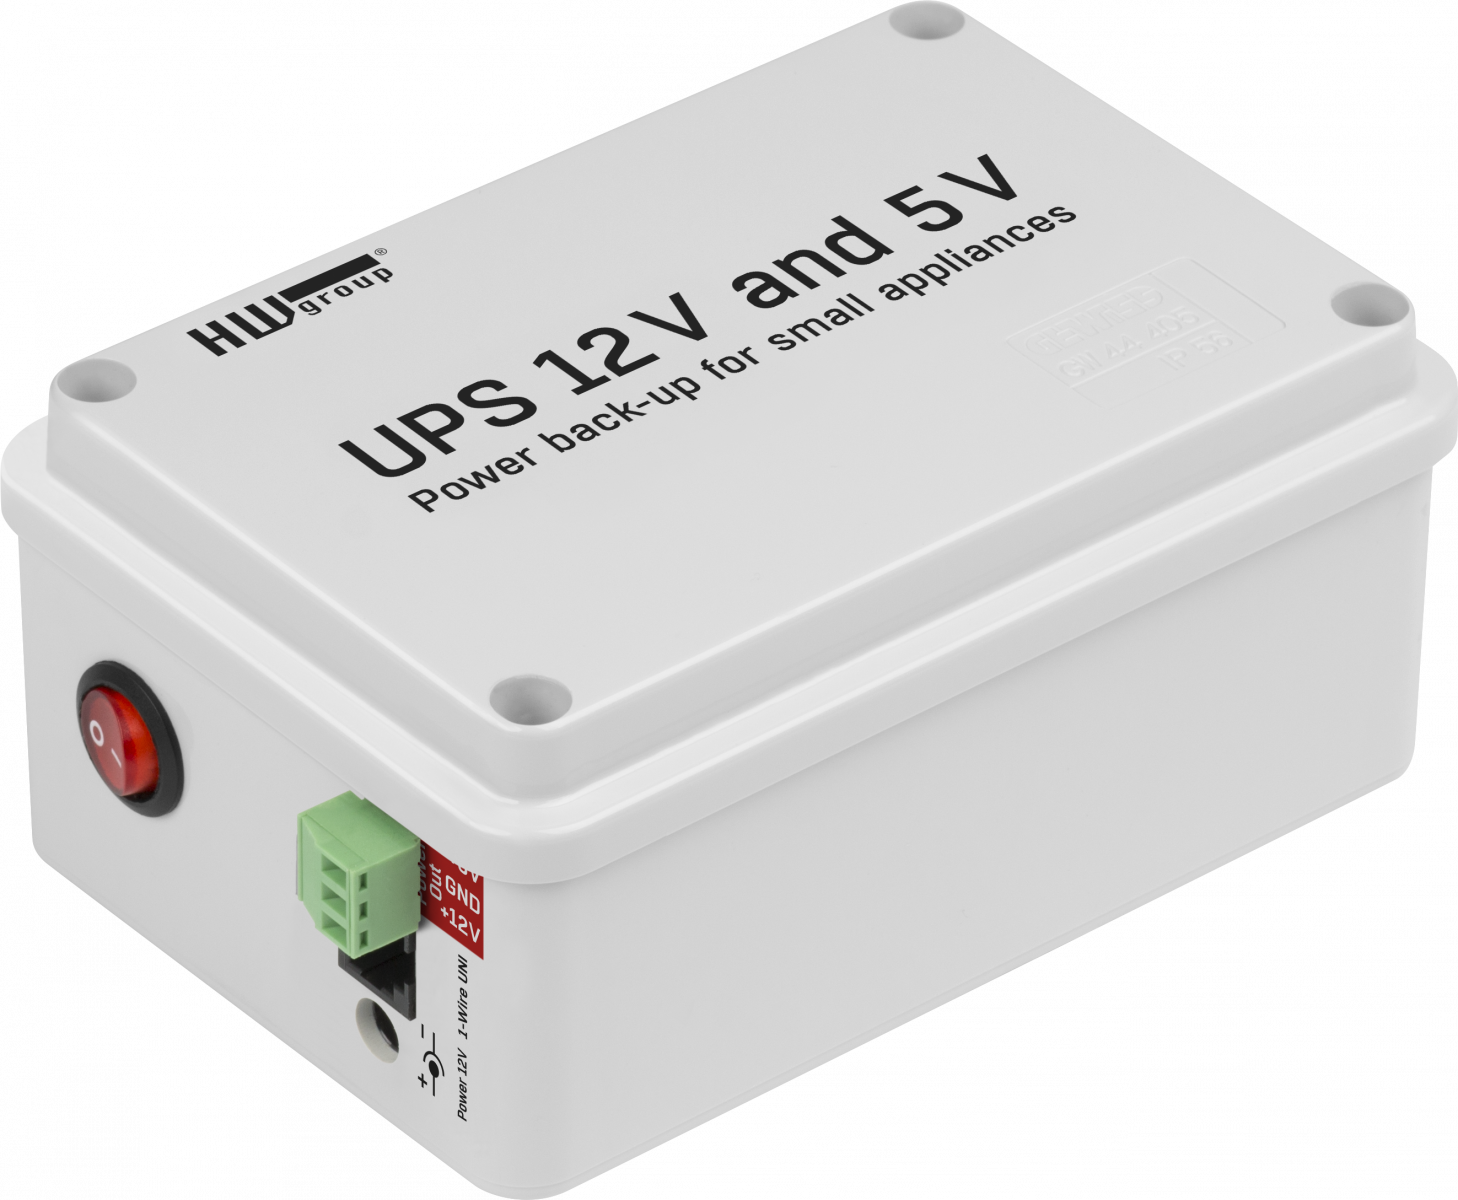 Mini ups battery backup 12V (UPS DC POWER SUPPLY) - GSM Activate